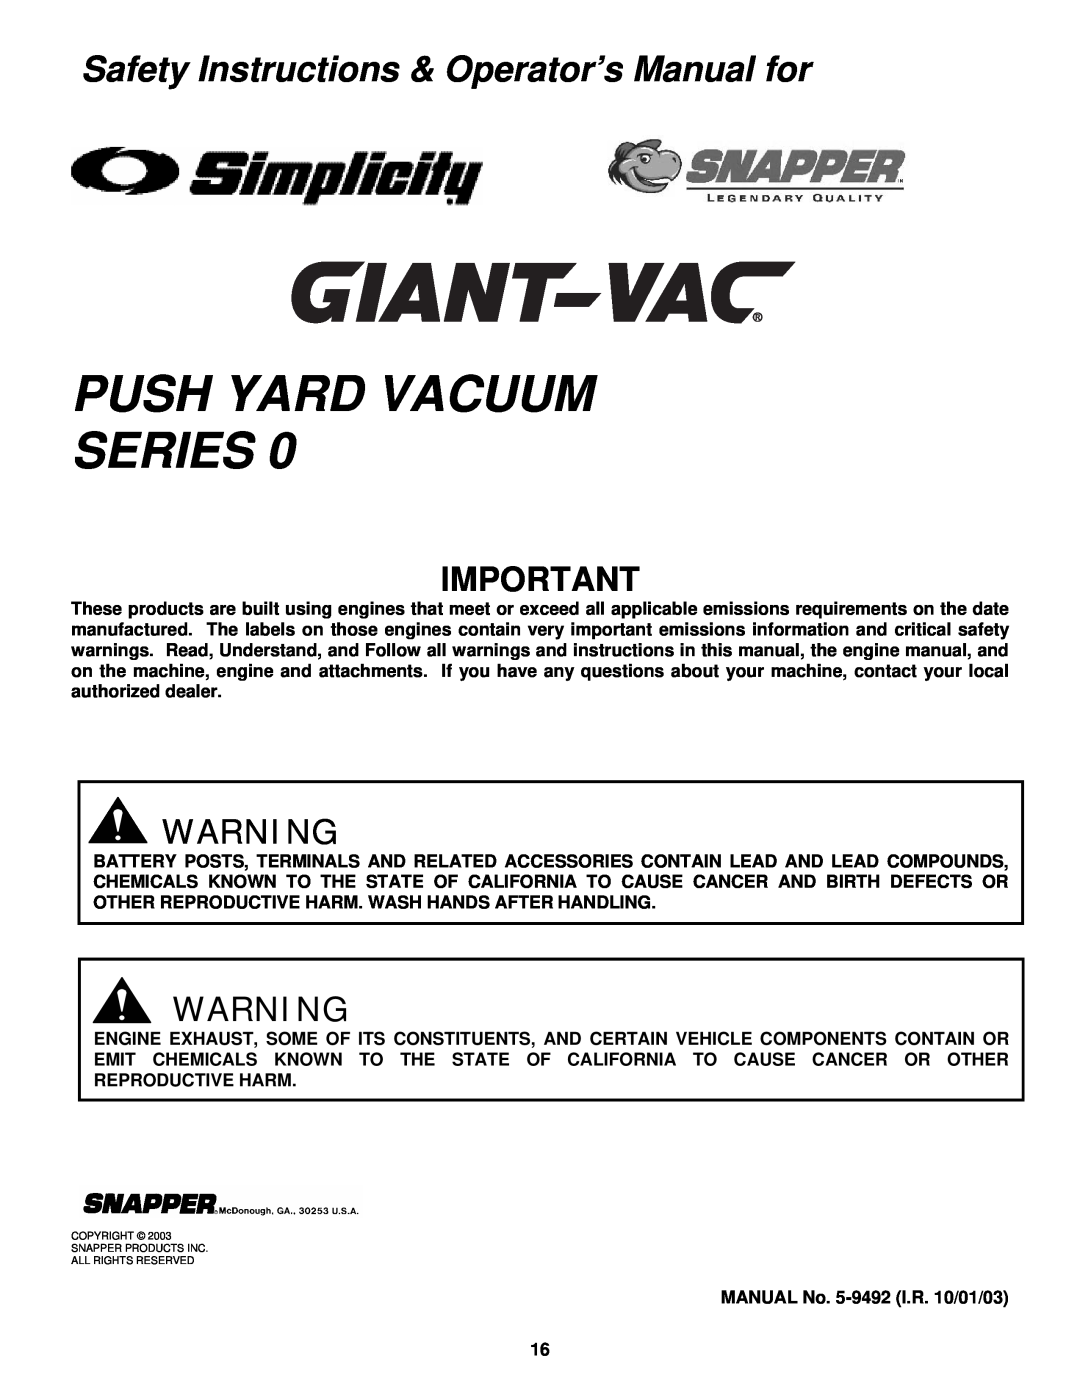 Snapper SV25550HC, SV25650B, SV25500HV, SV25550HV Push Yard Vacuum Series, Safety Instructions & Operator’s Manual for 